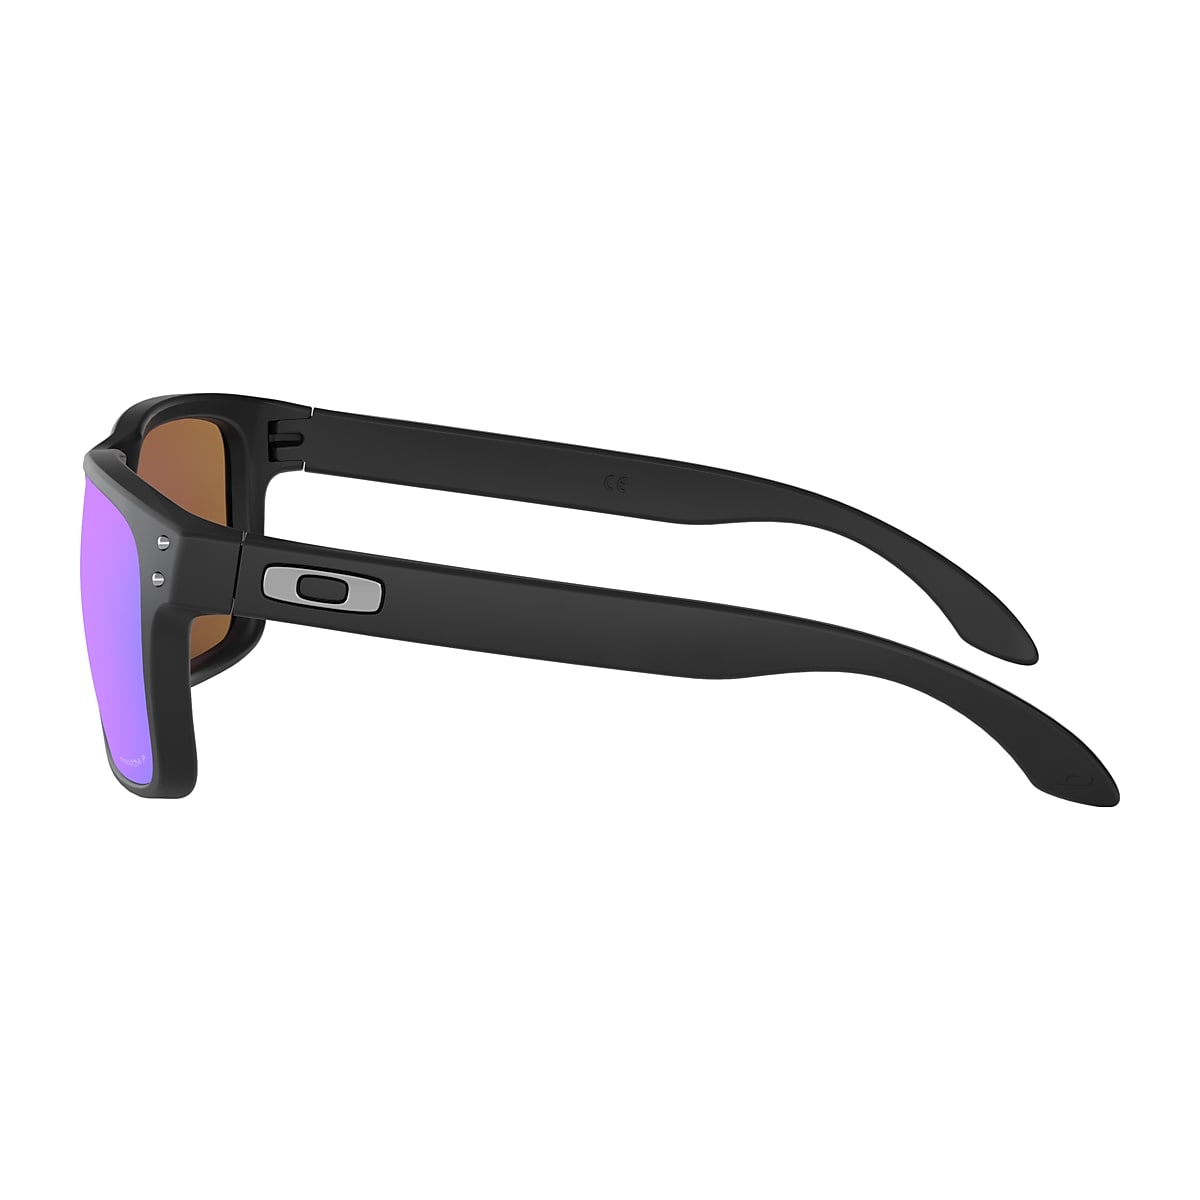 Holbrook™ Prizm Sapphire Polarized Lenses, Matte Black Frame Sunglasses |  Oakley® AU